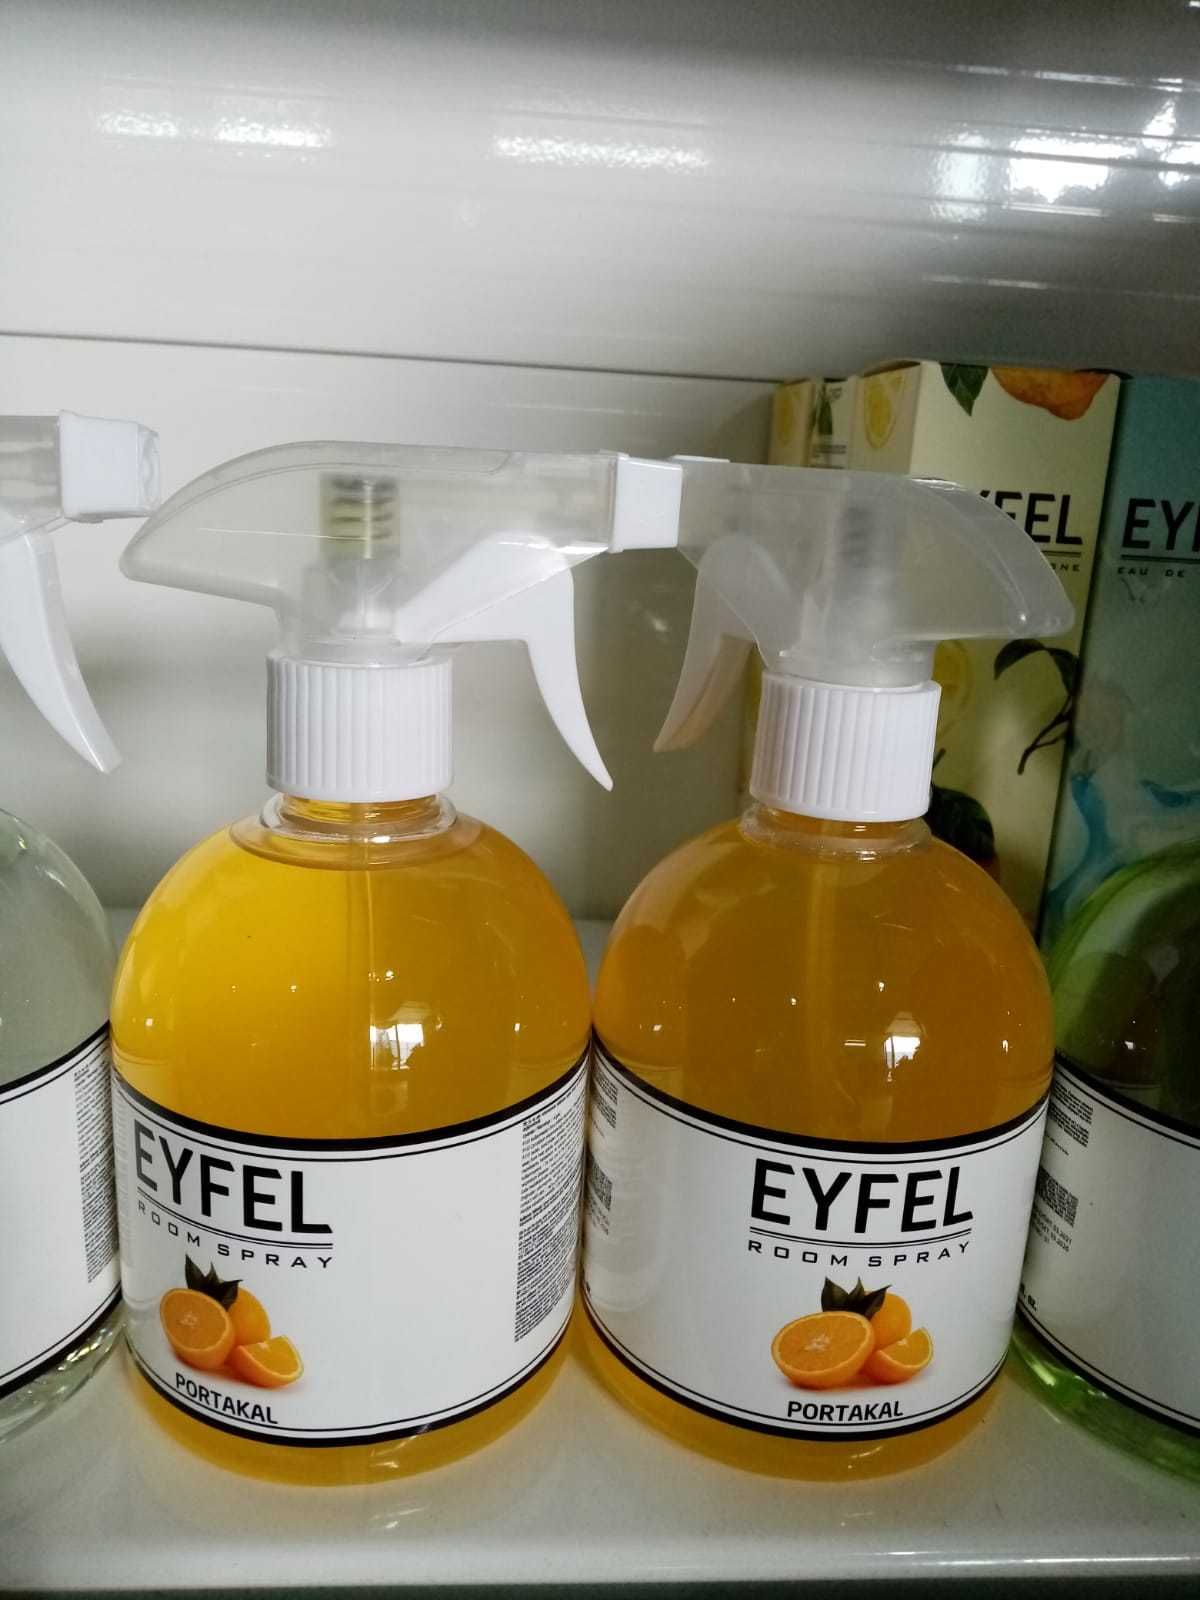 Eyfel, Spray pentru camera si textile